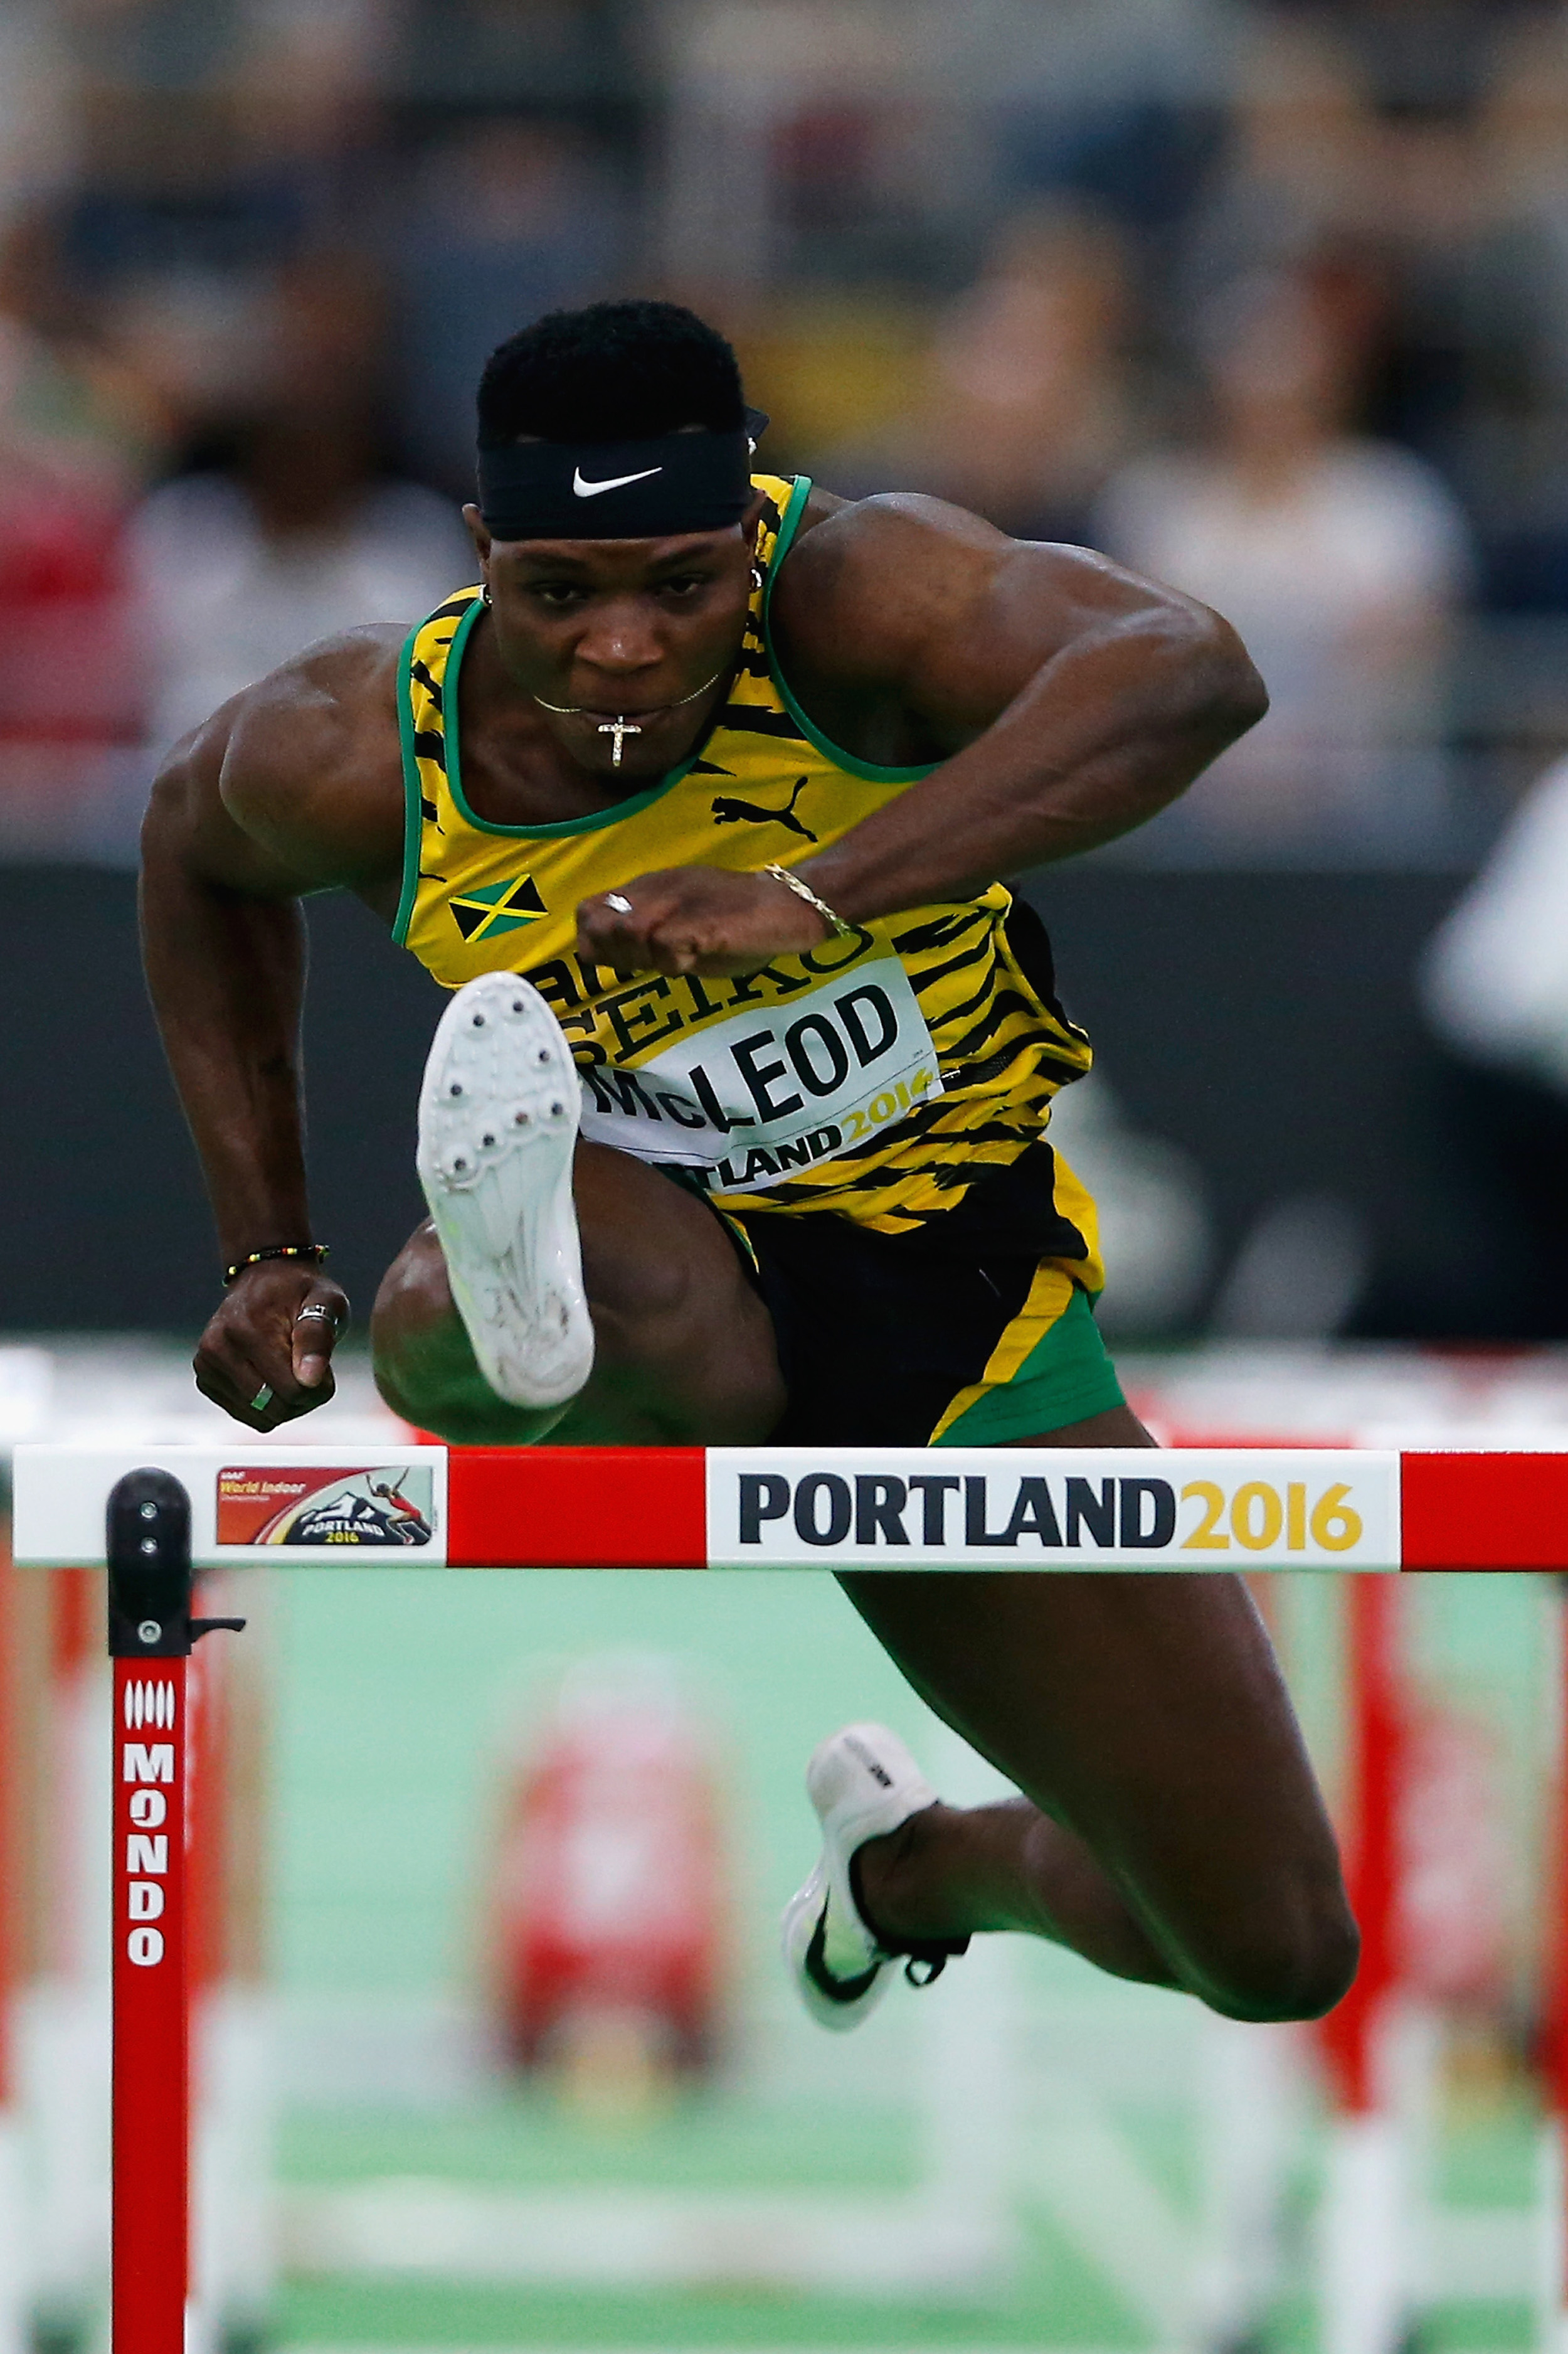 “I am a hurdler, not a sprinter”- Olympic Champion Omar Mcleod